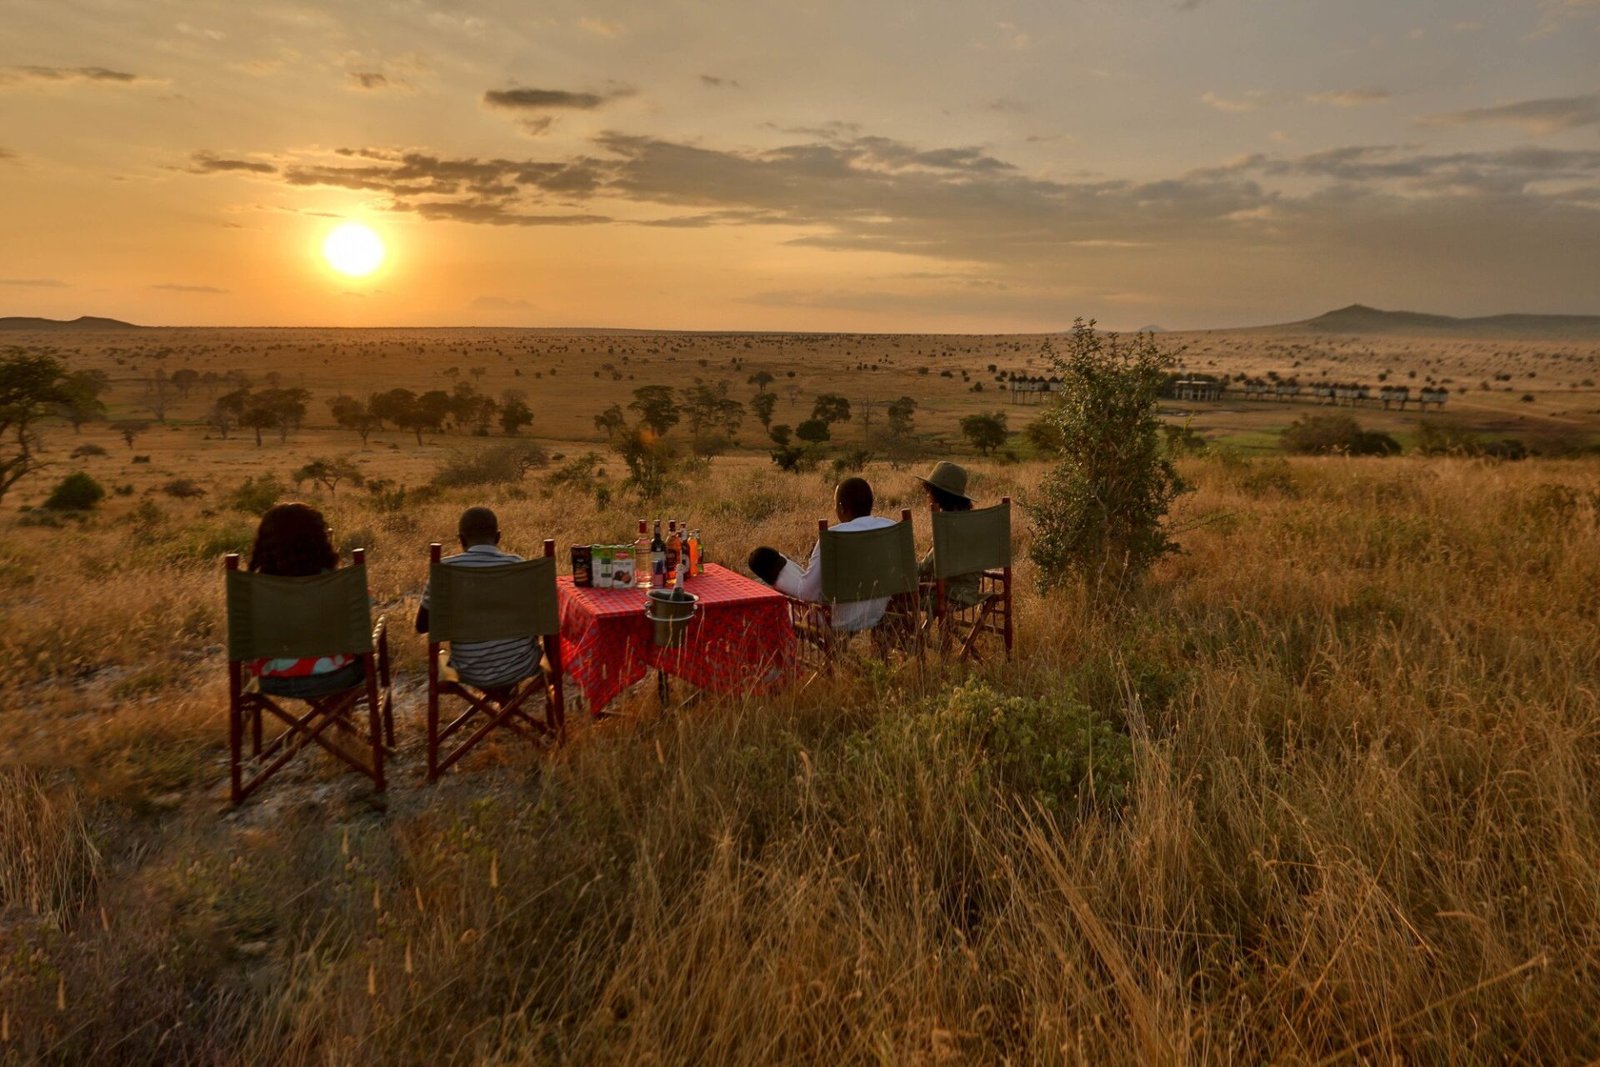 Exploring Kenya's savanna